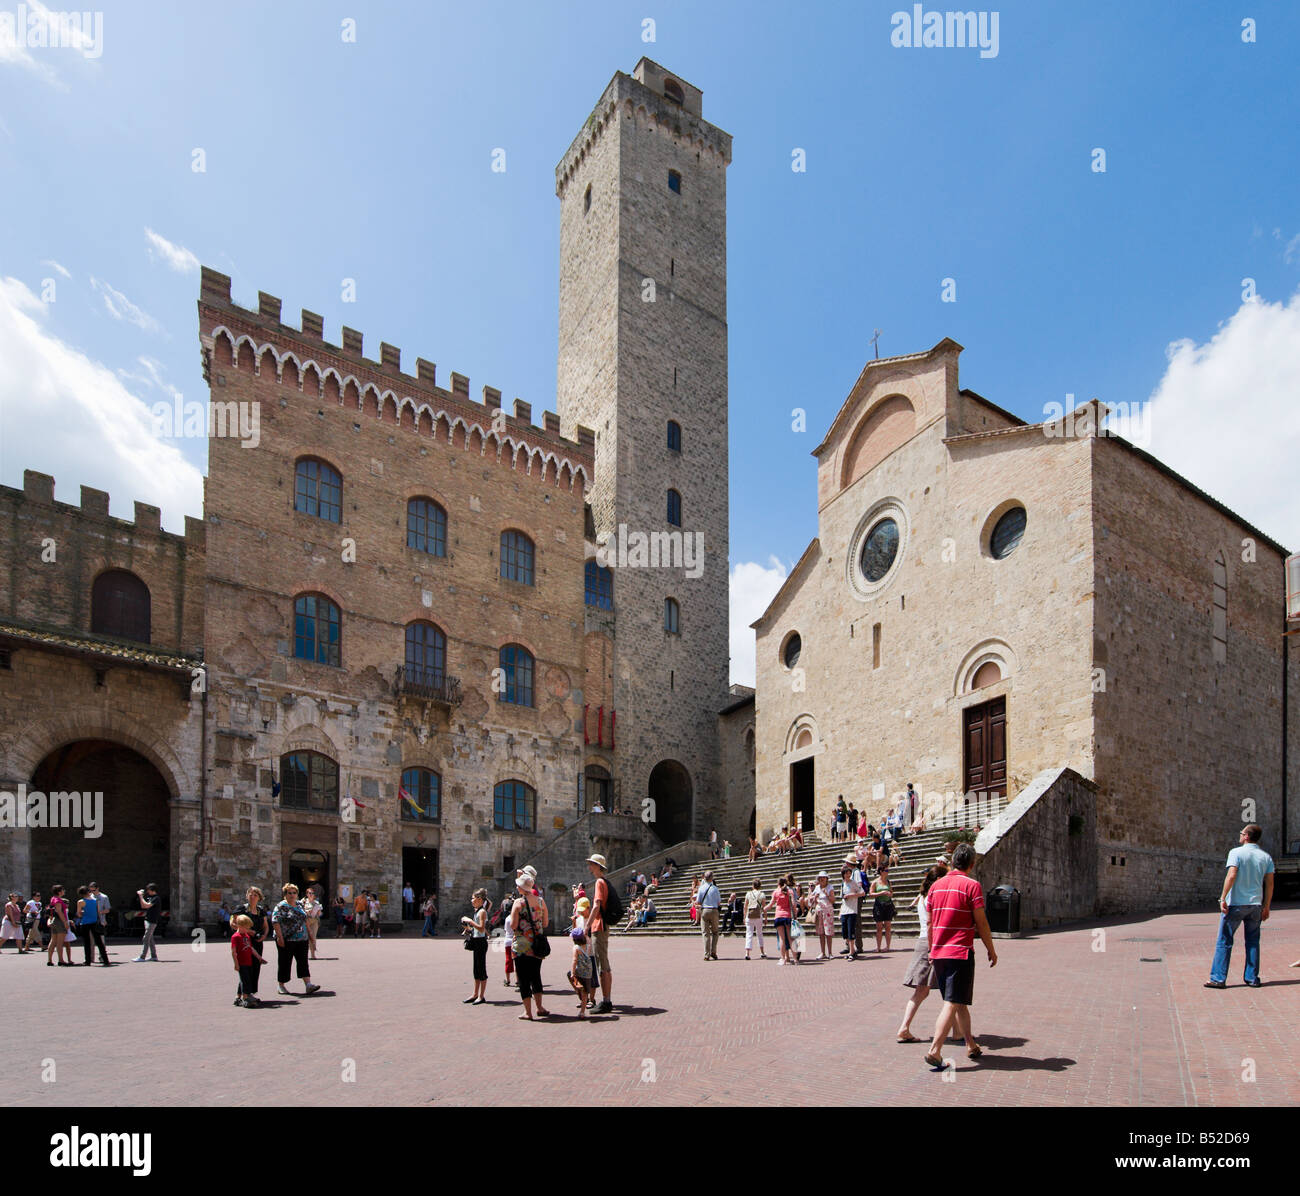 La Collegiata (Duomo) et de la Torre Grossa dans la Piazza del Duomo, San Gimignano, Toscane, Italie Banque D'Images